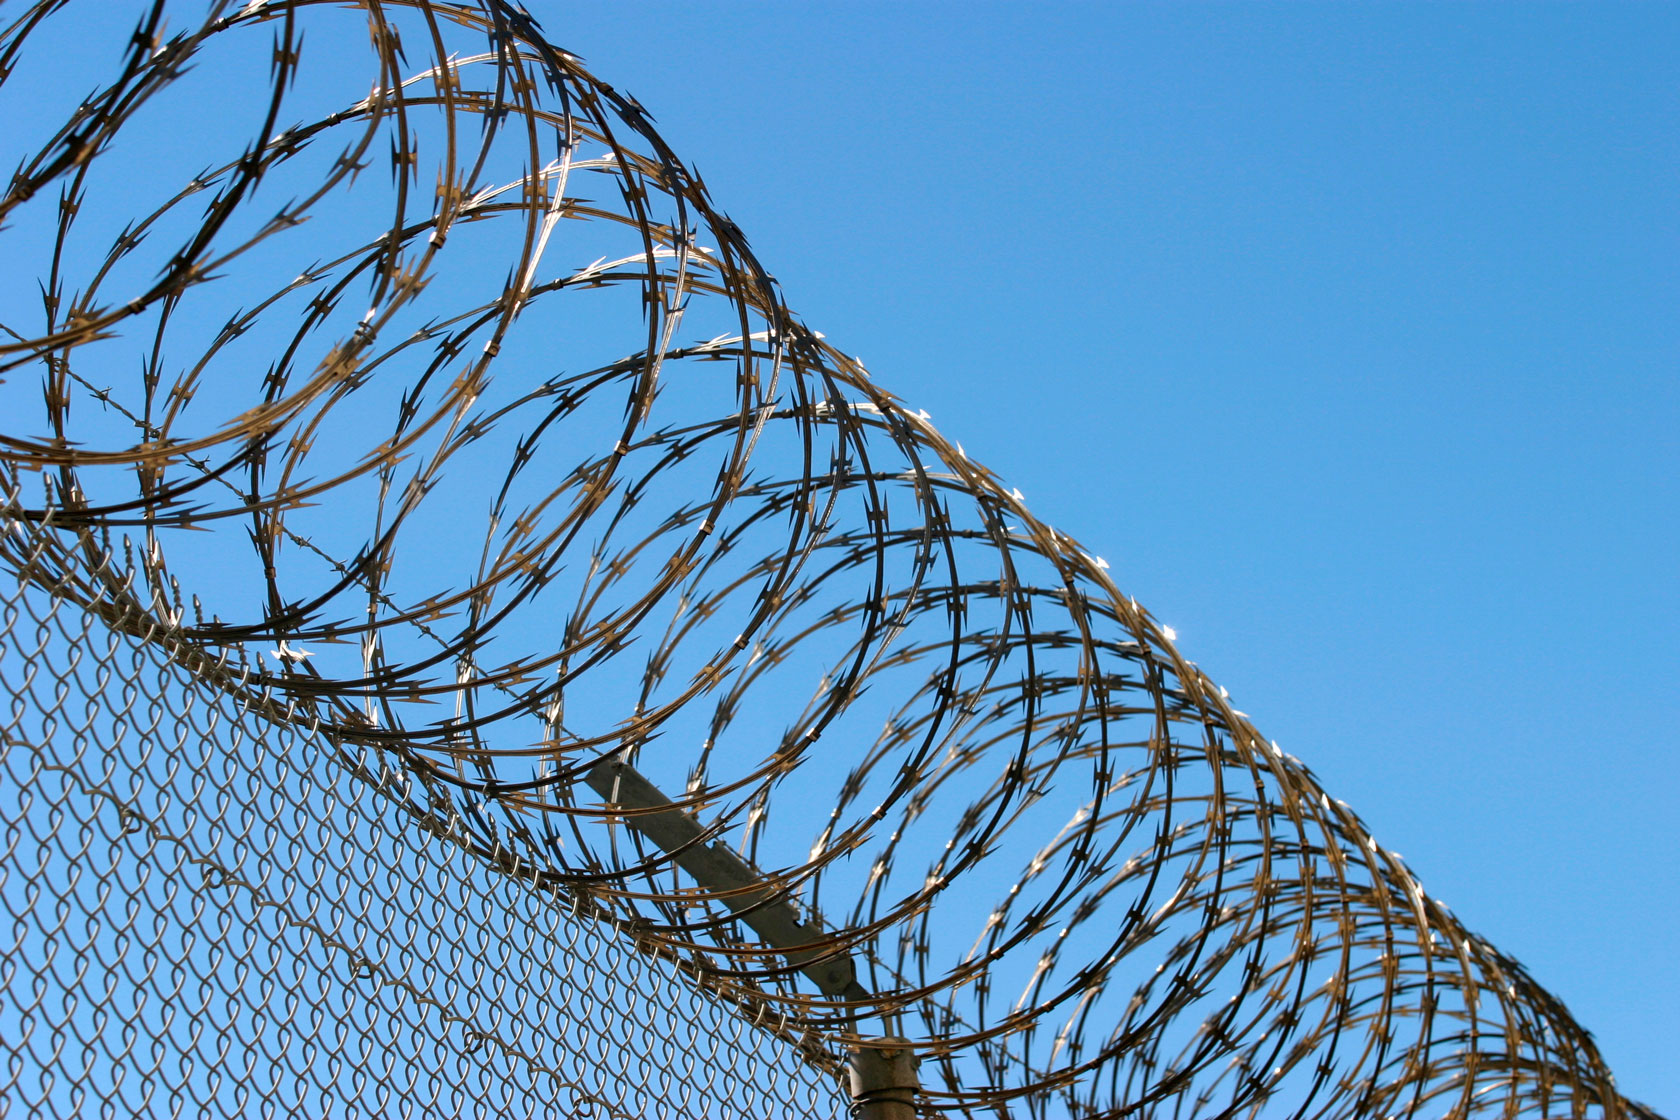 Photo showing razor wire outside of a prison